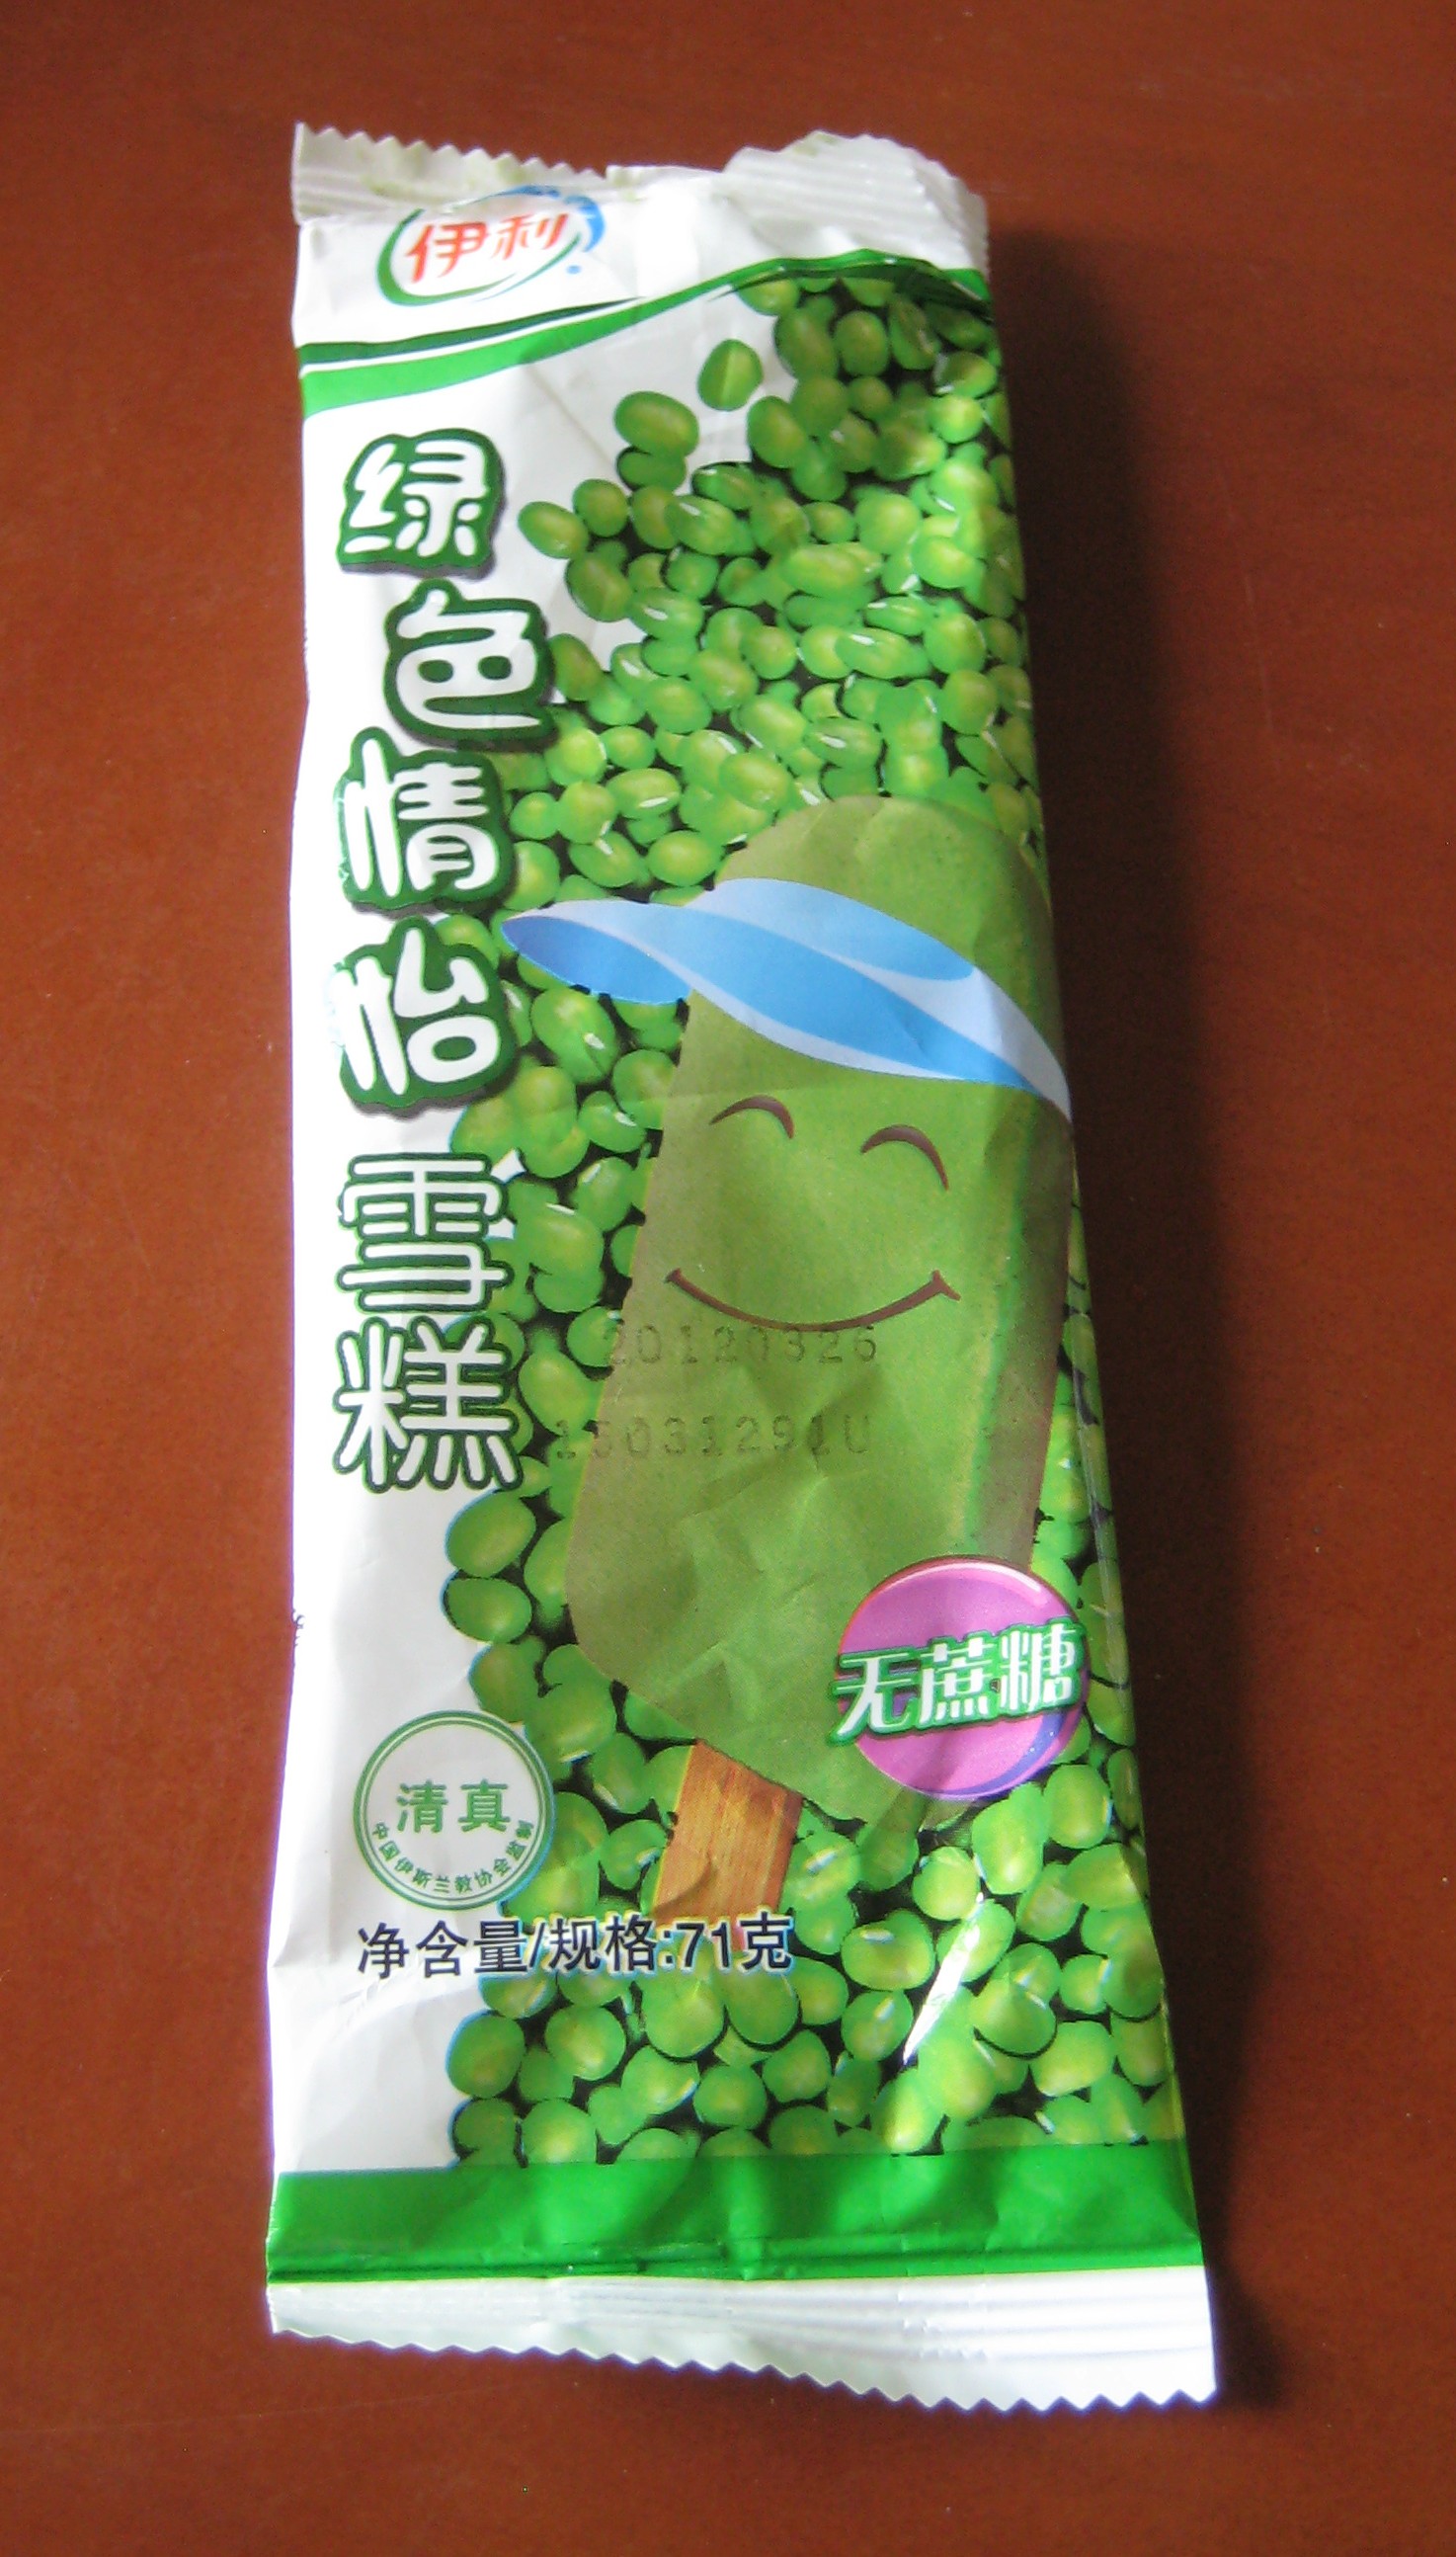 Pea Ice Cream, please? Sisters in China